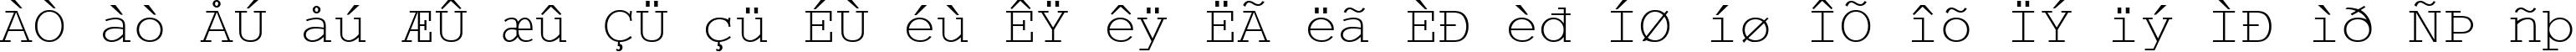 Пример написания английского алфавита шрифтом WP MultinationalA Courier